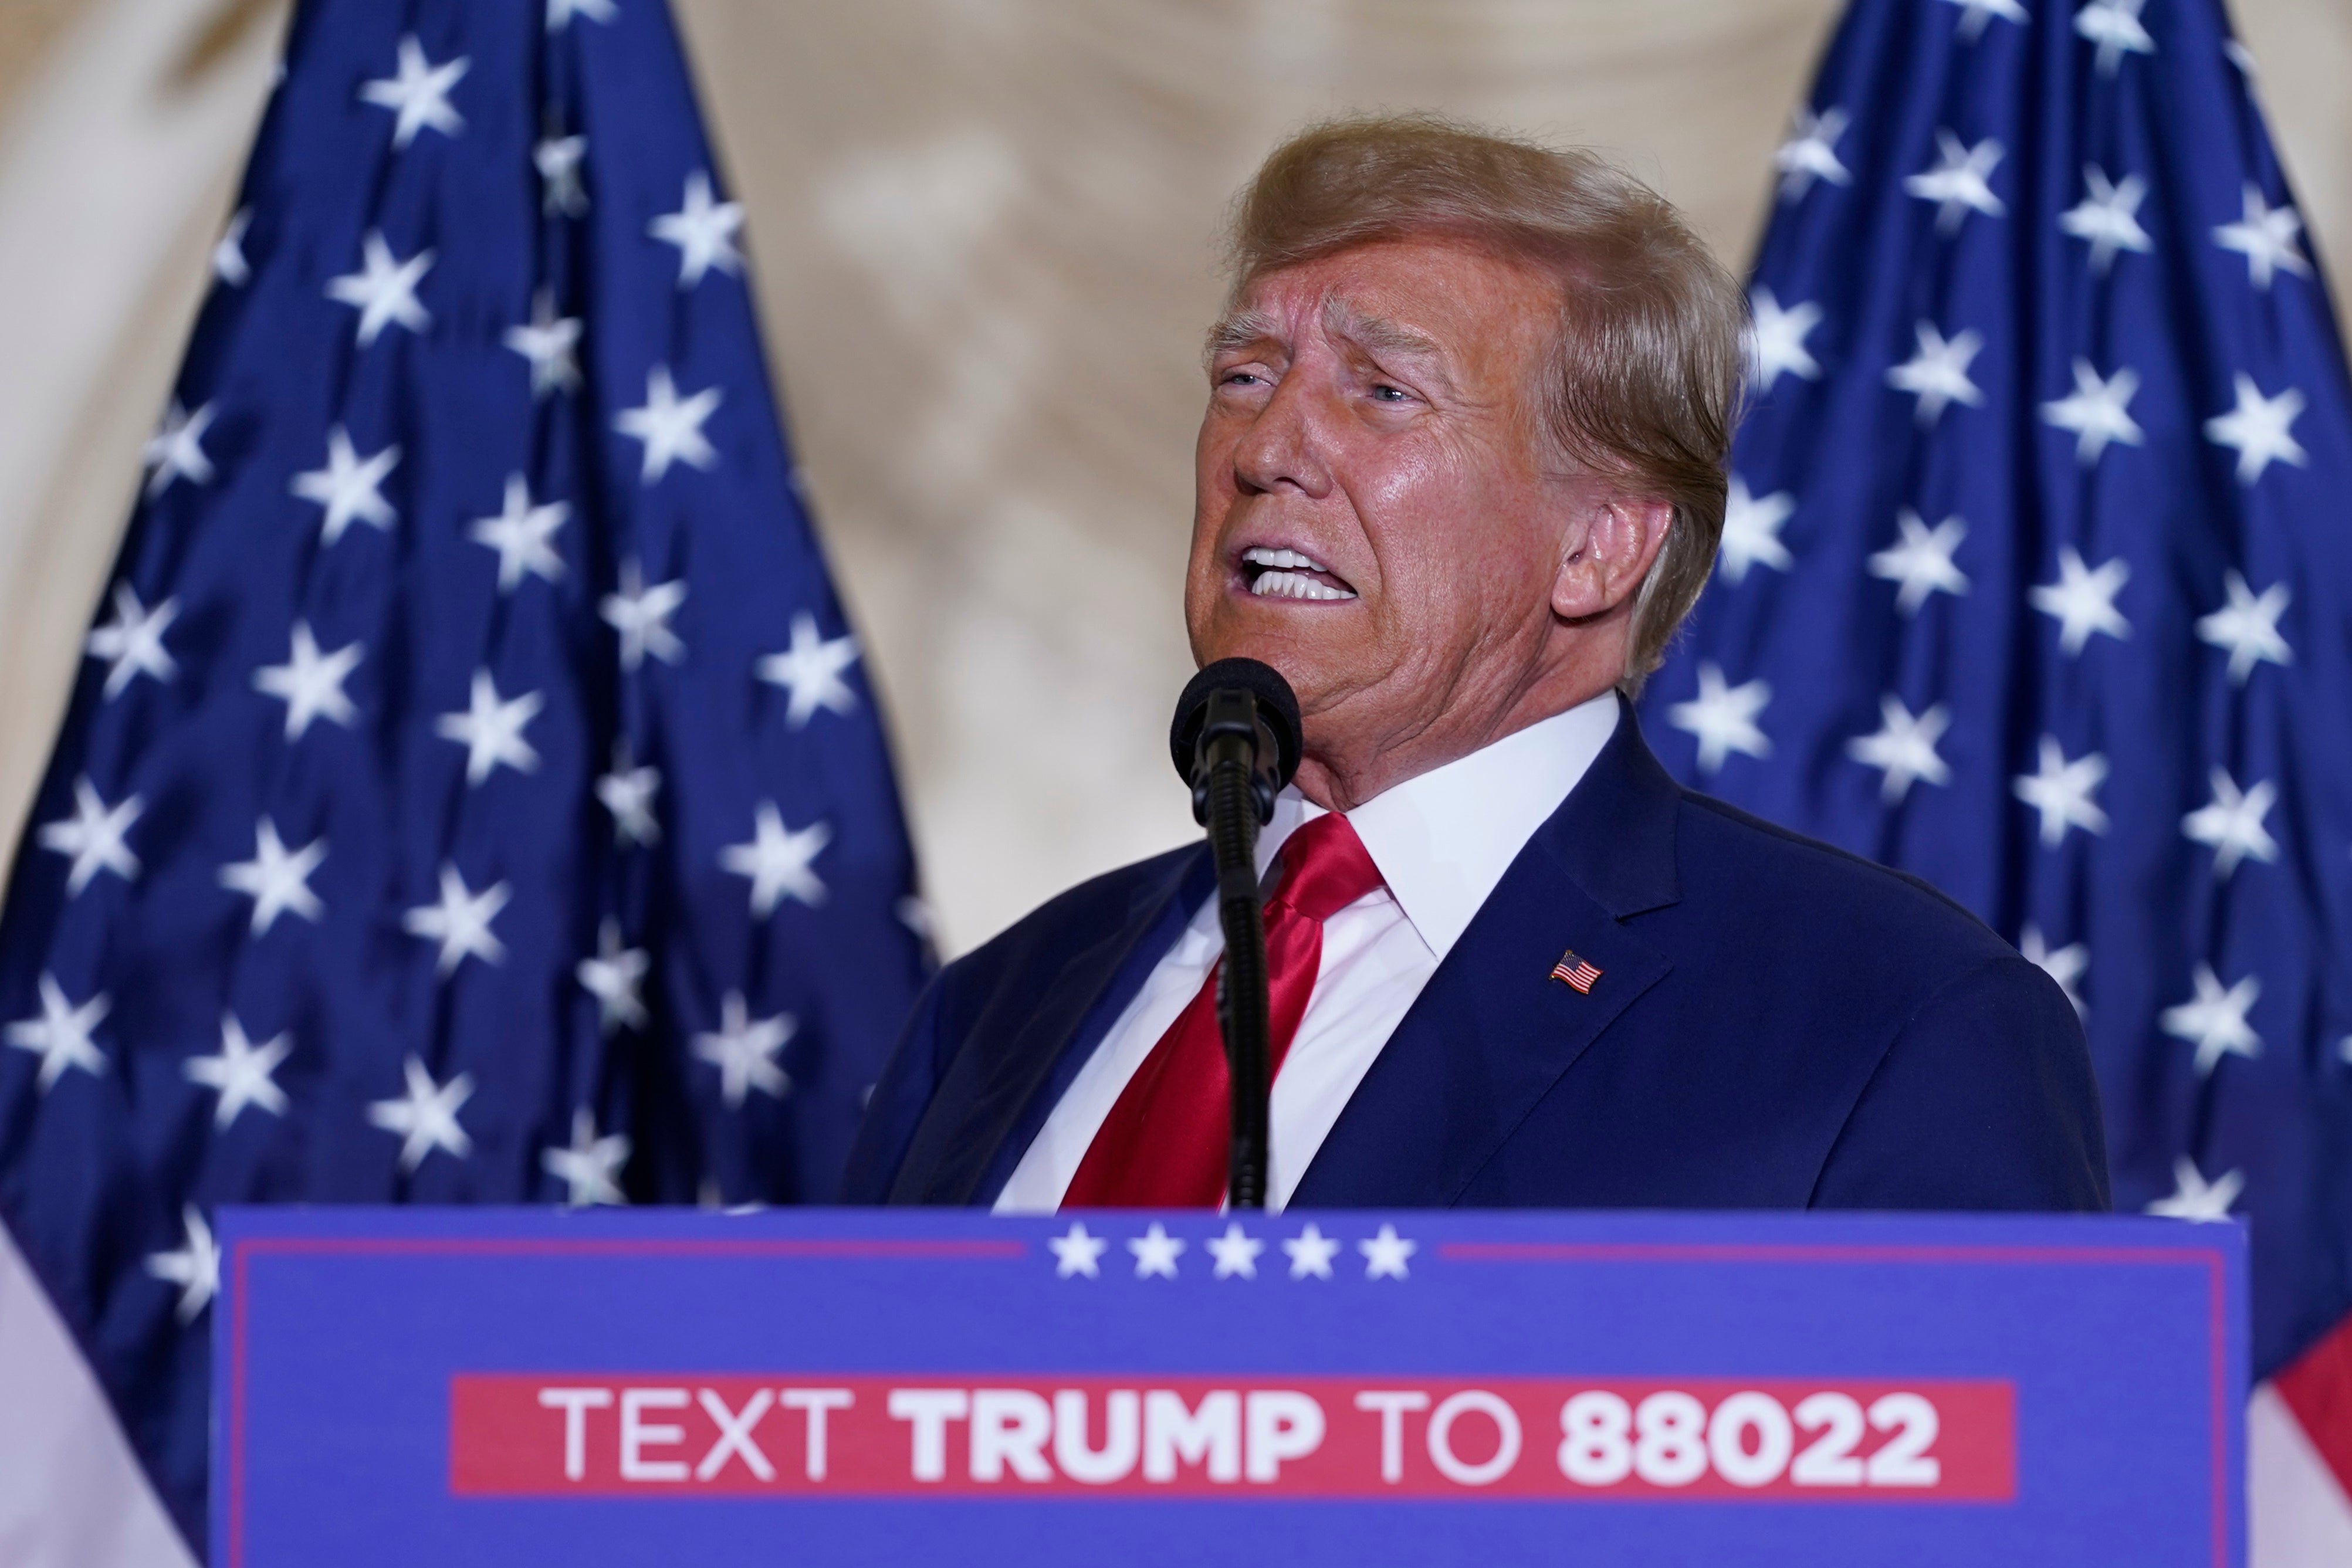 Trump speaks at Mar-a-Lago on Tuesday night